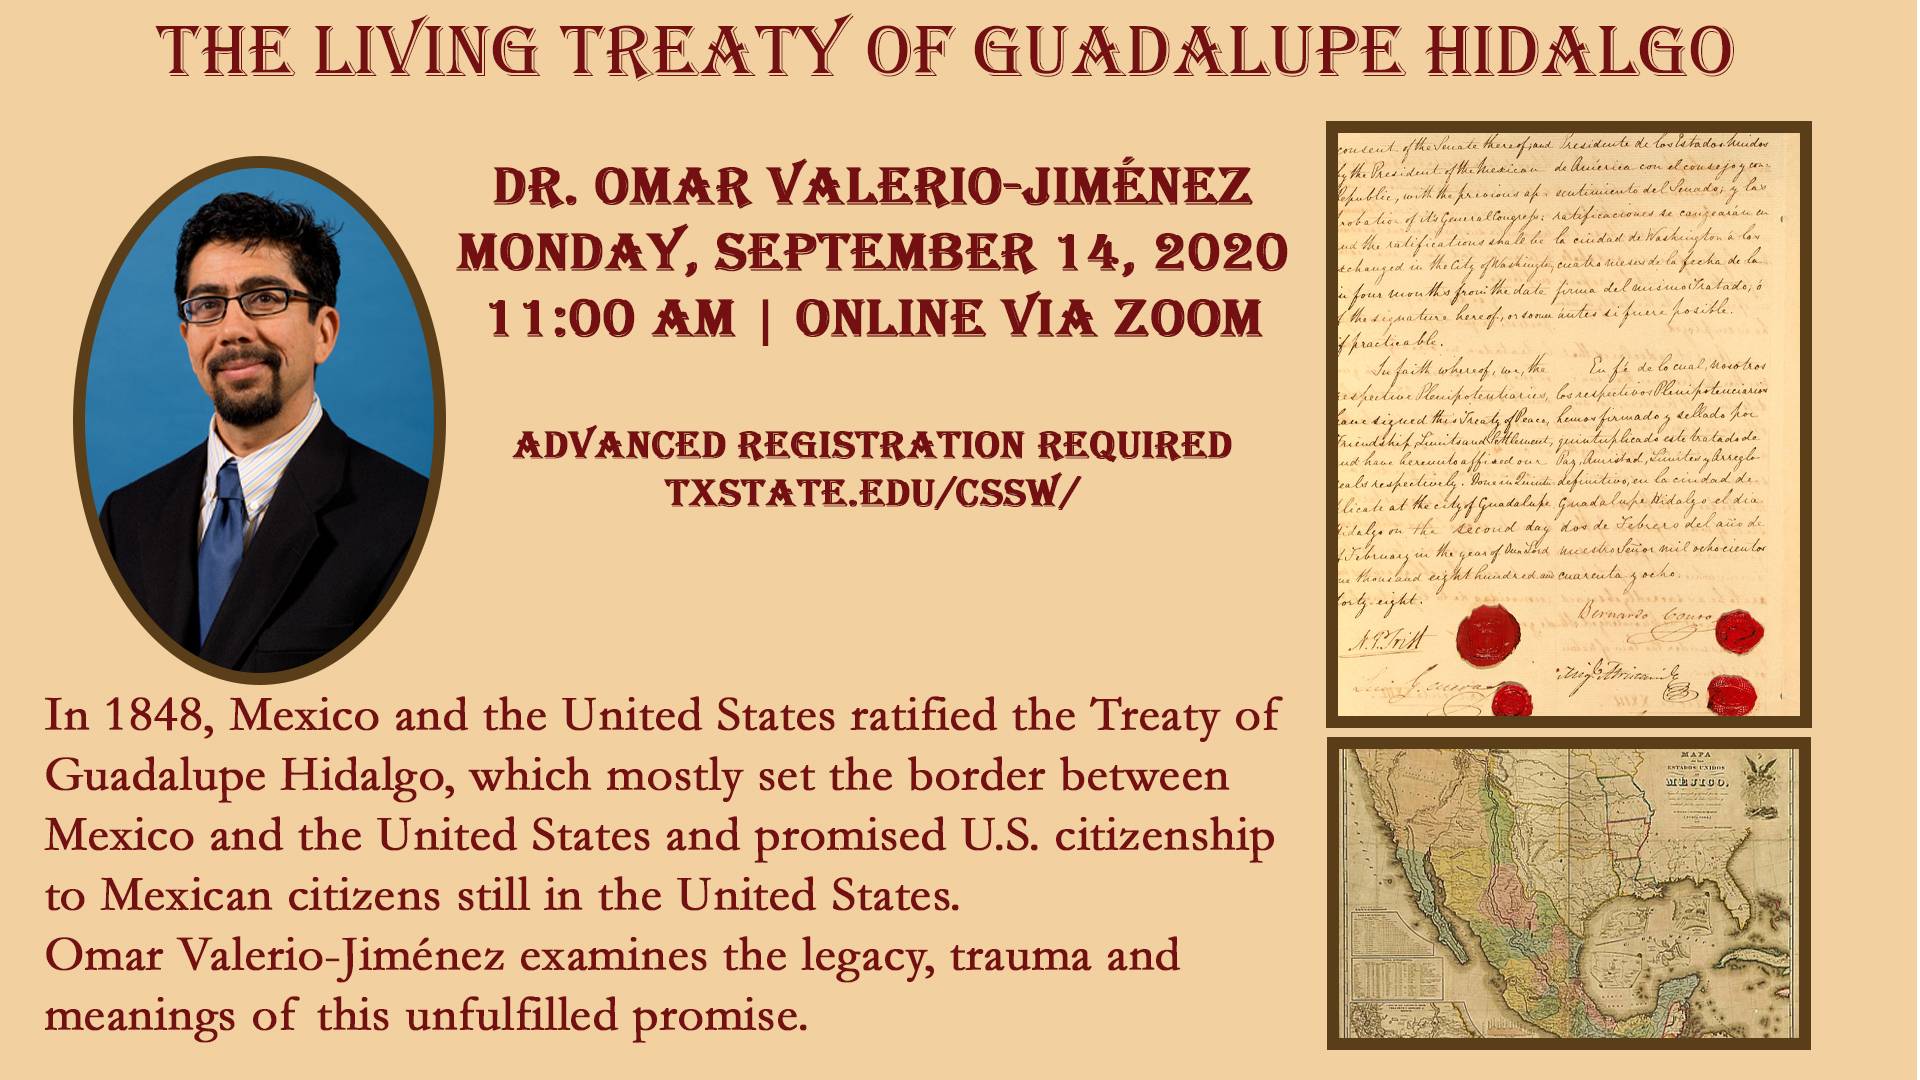 The Living Treaty of Guadalupe Hidalgo